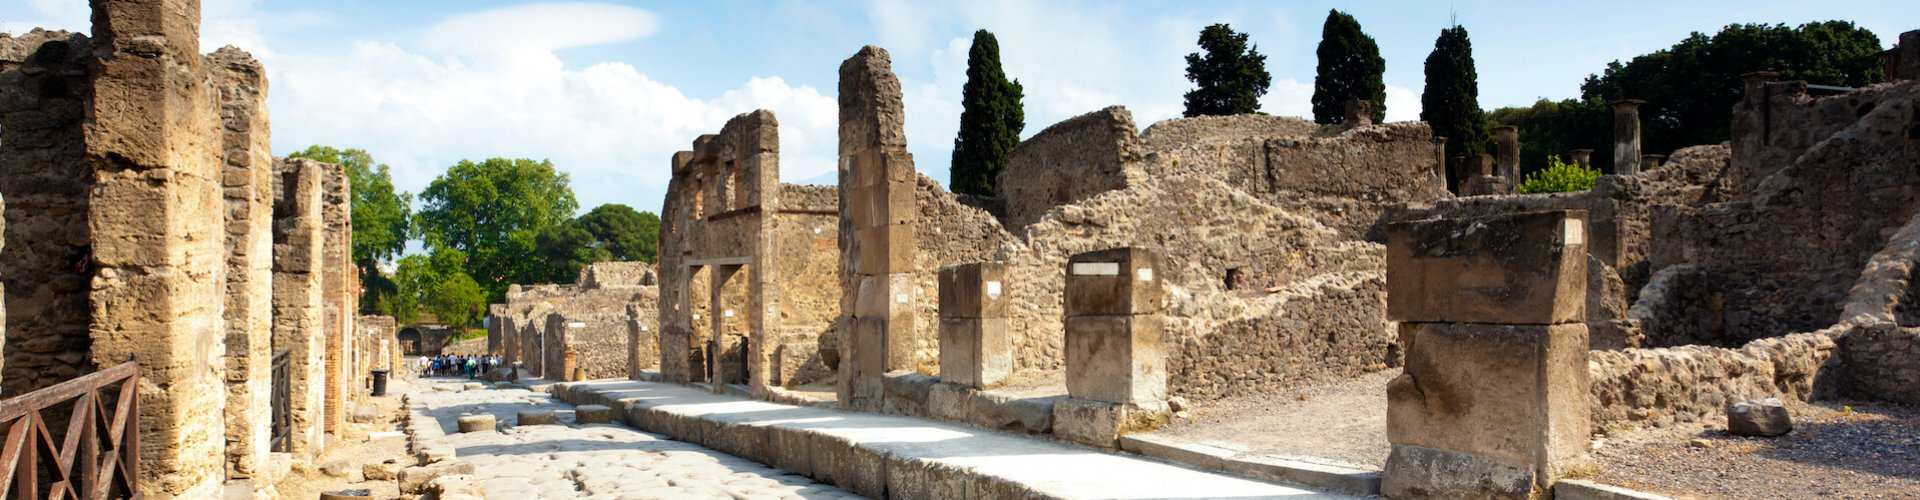 Ausflugsziel Pompeji